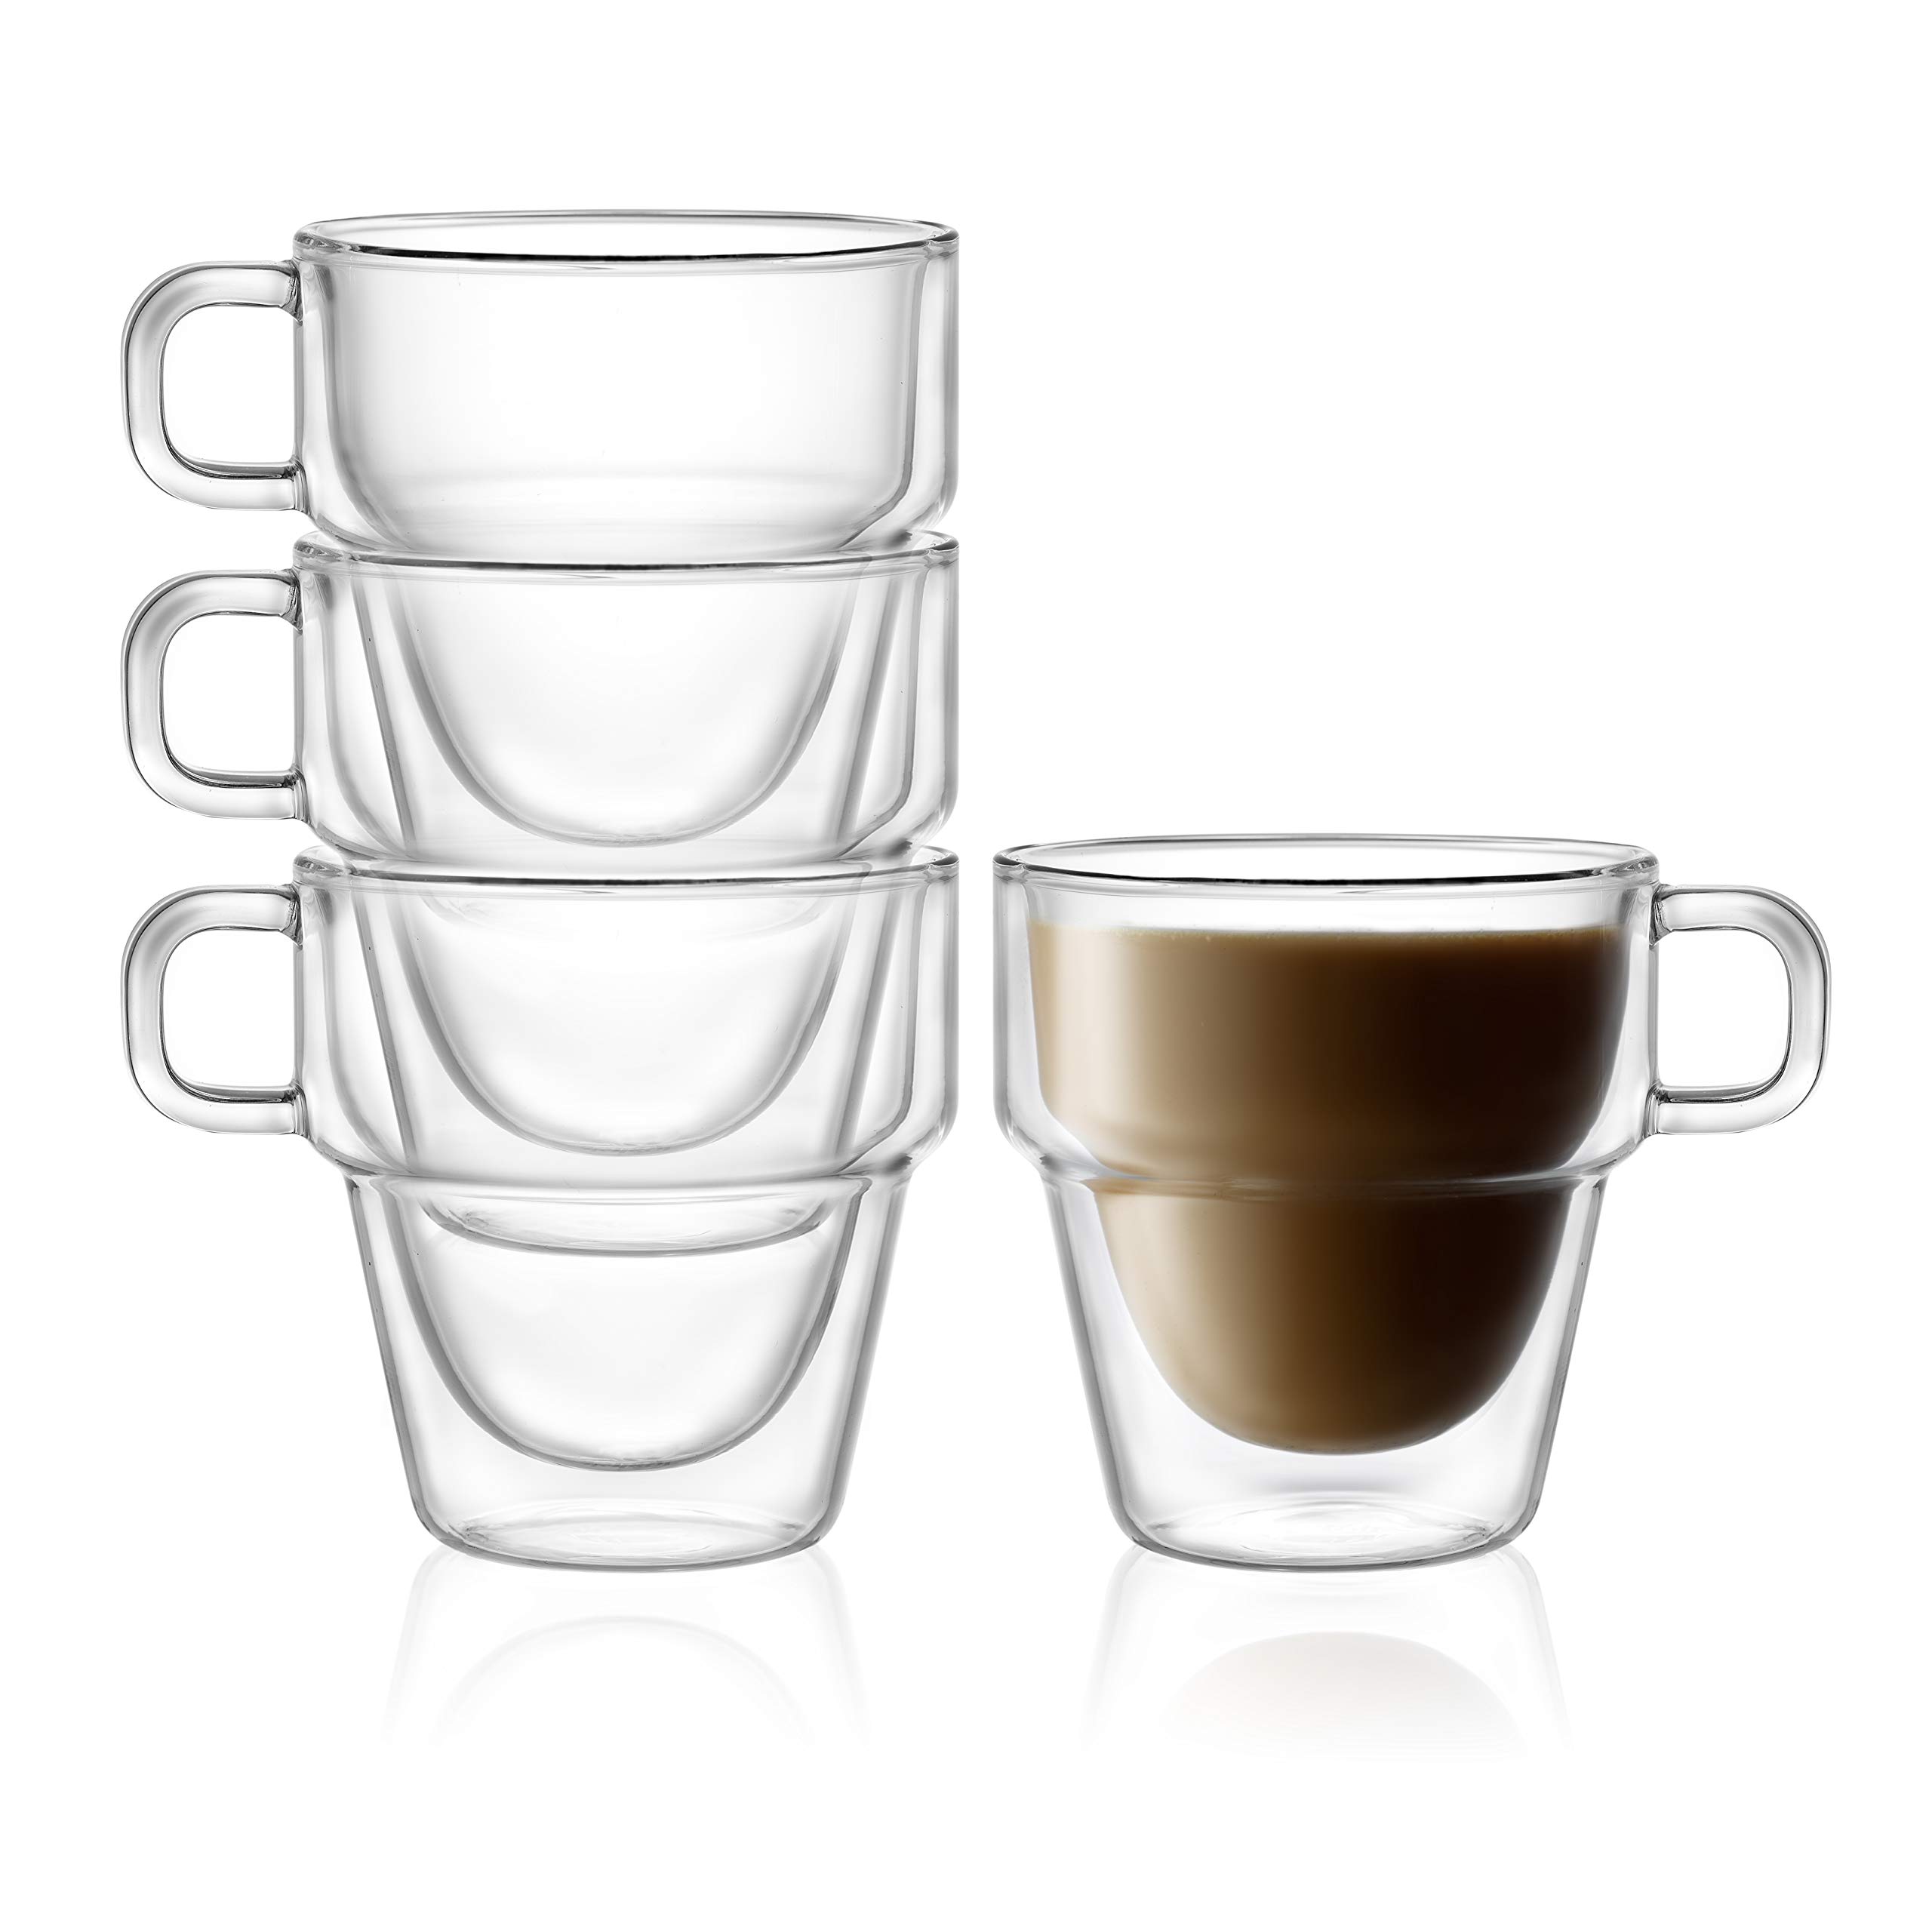 Stoiva Double Wall Insulated Coffee Mugs